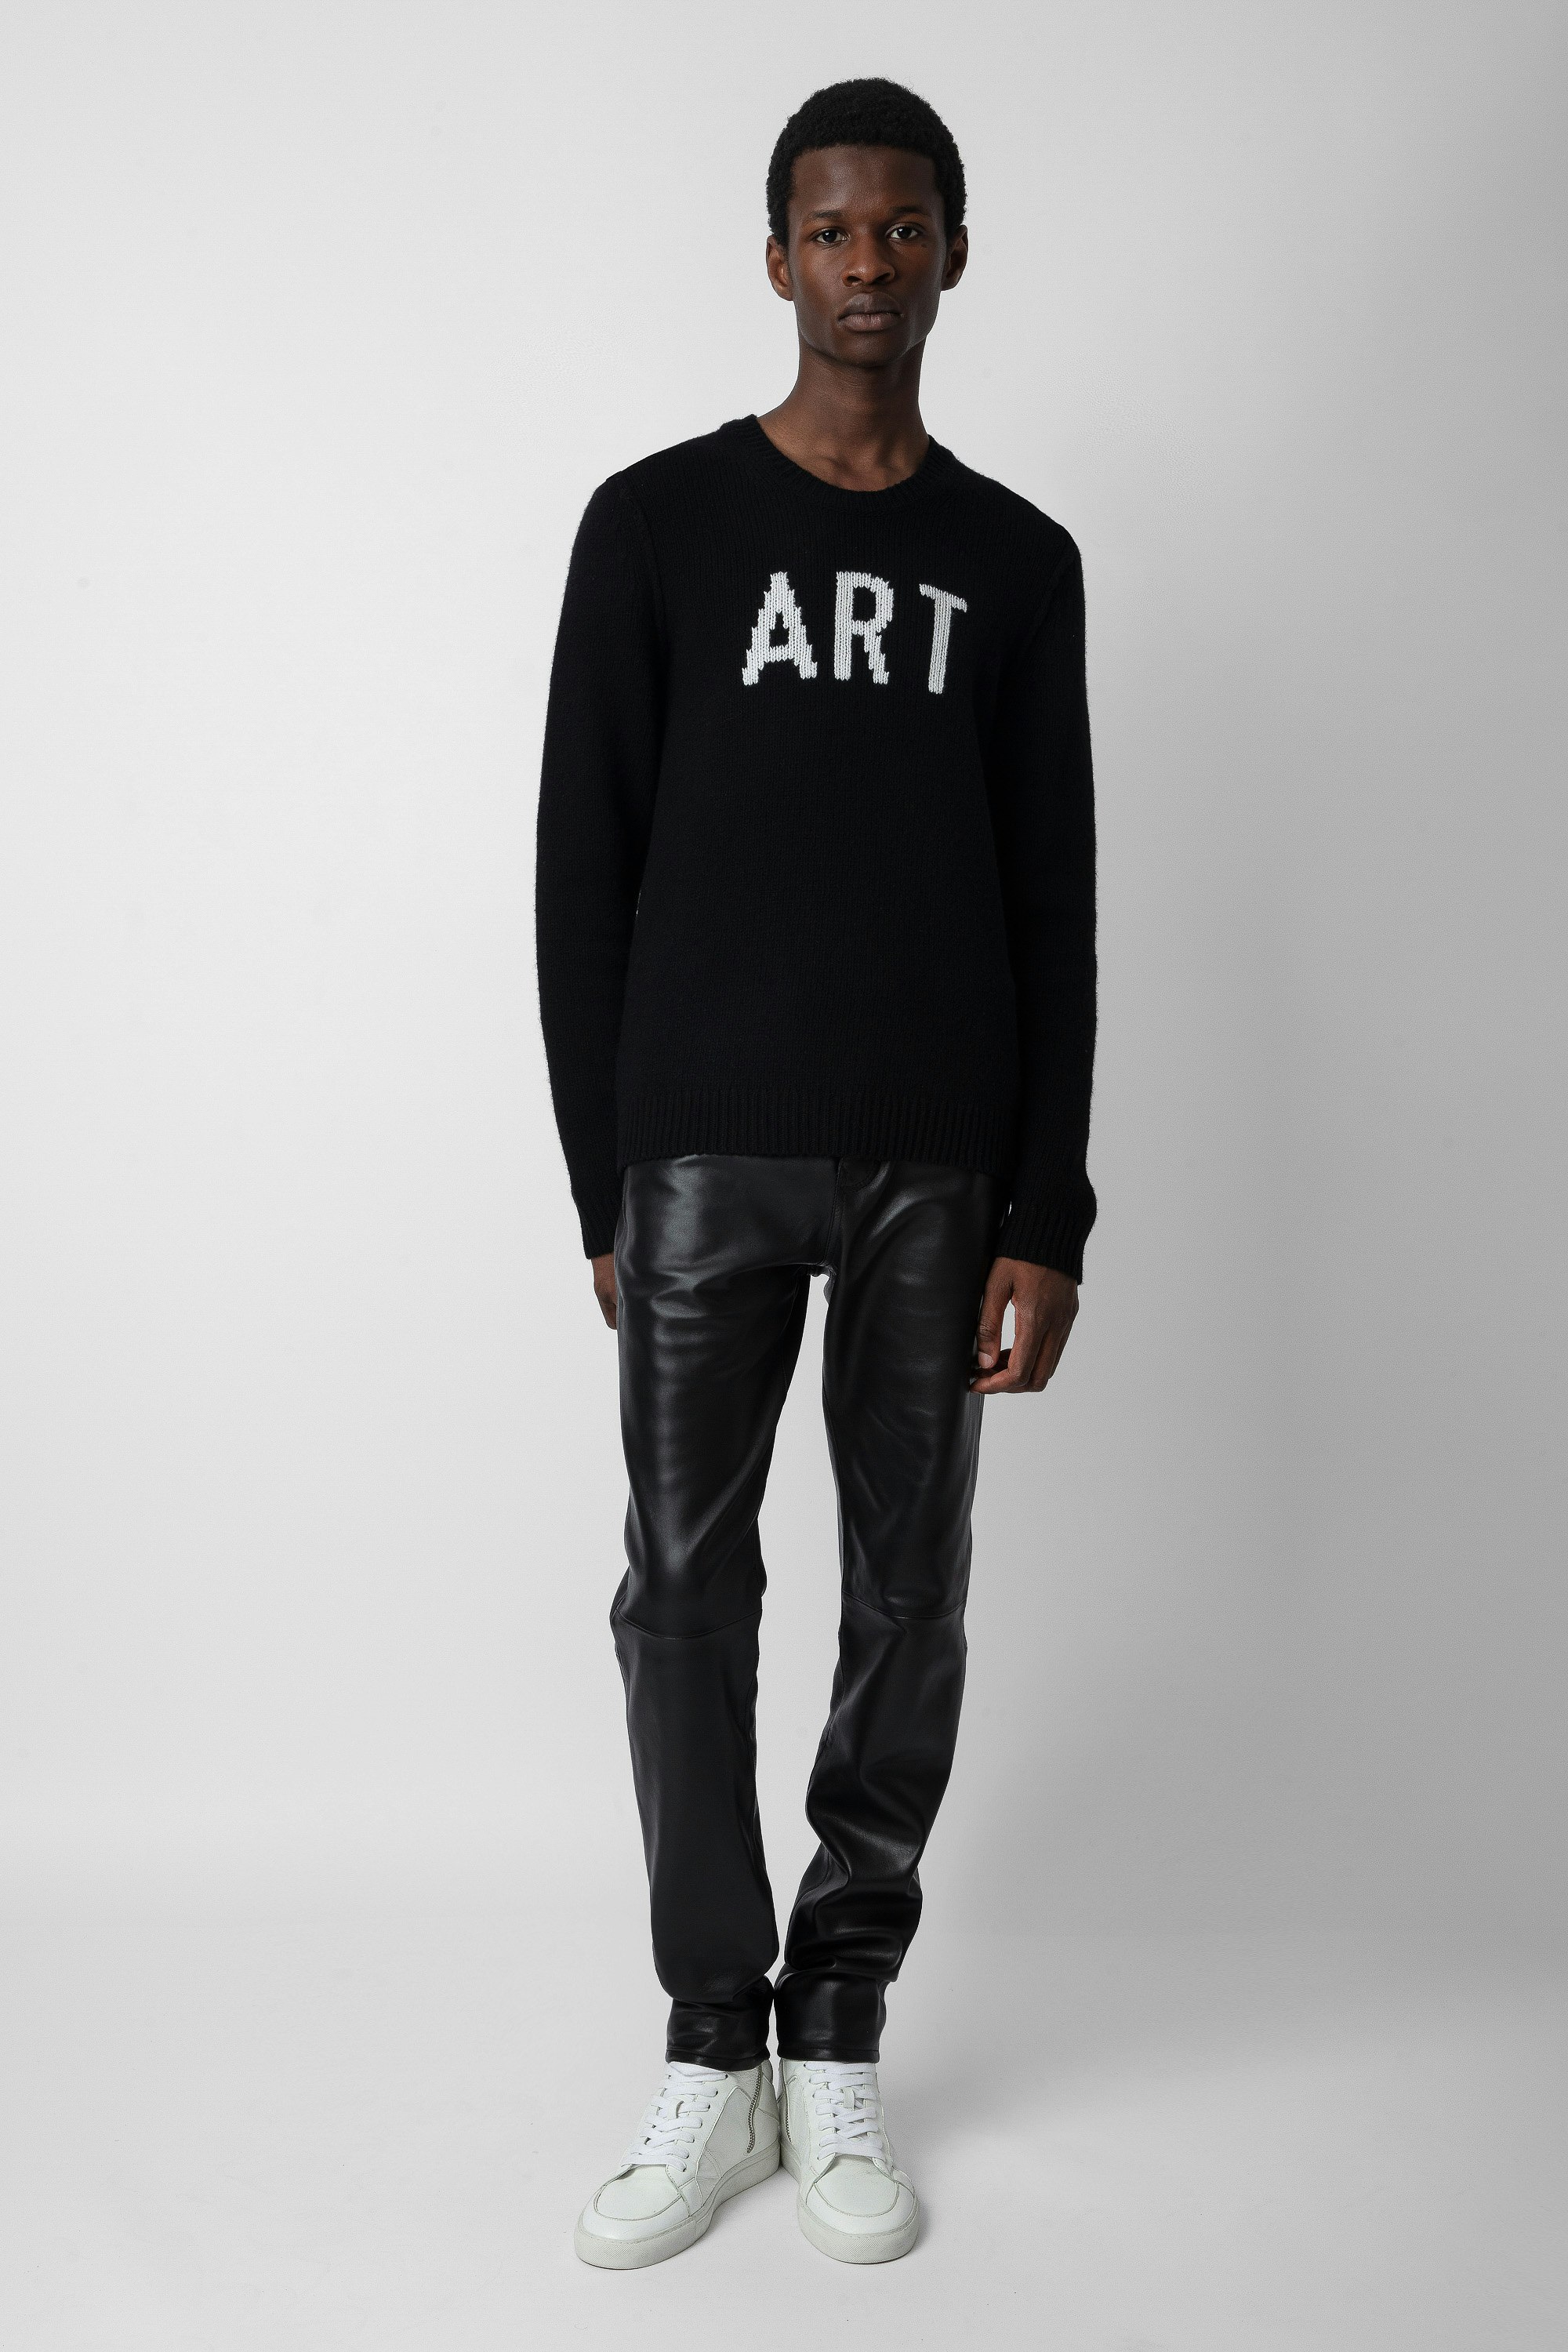 Kennedy Jumper - Men’s black merino wool jumper with “Art” slogan.